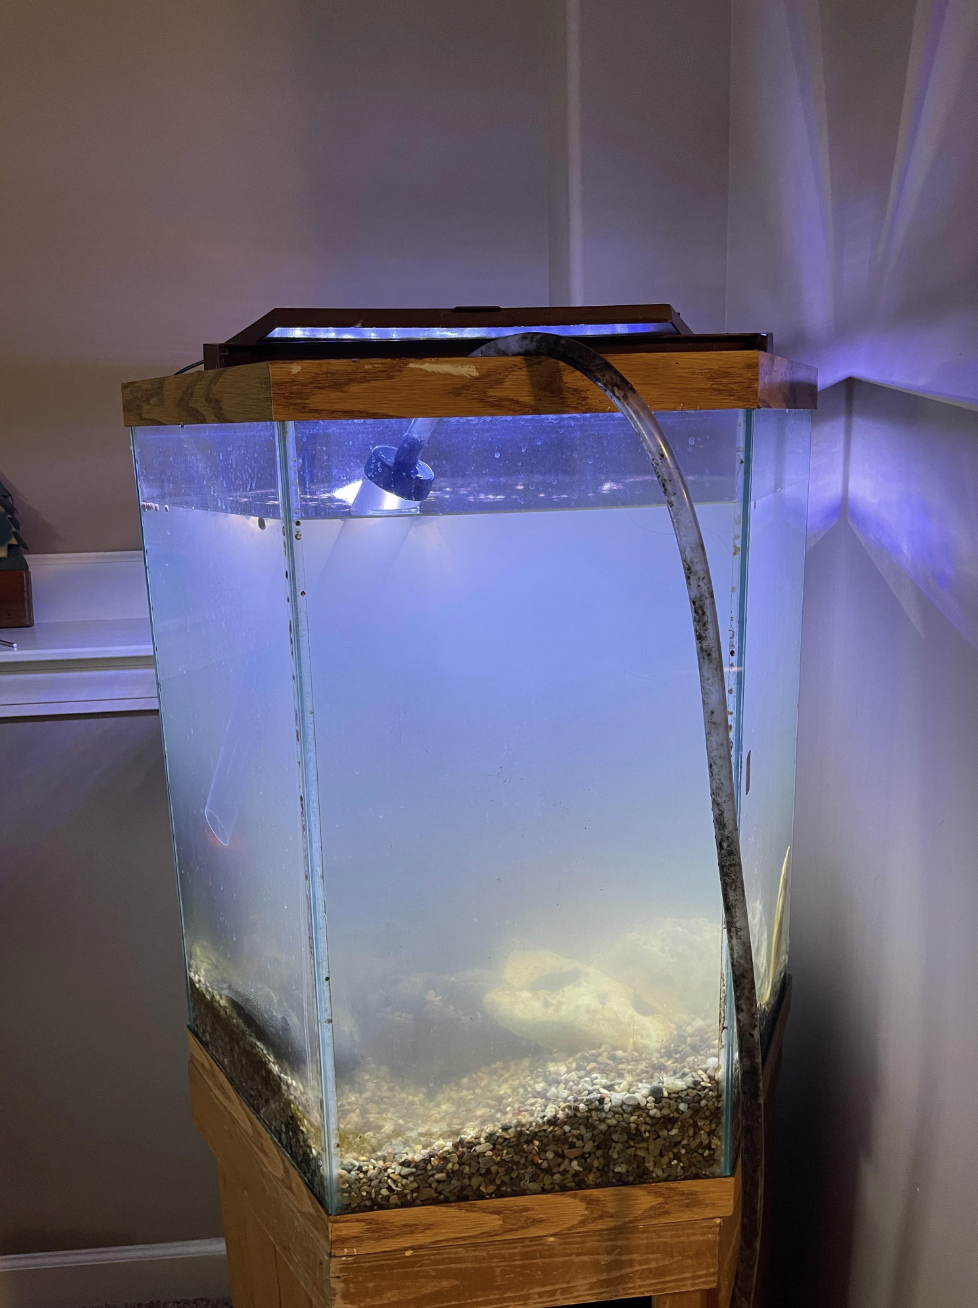 A dirty fish tank